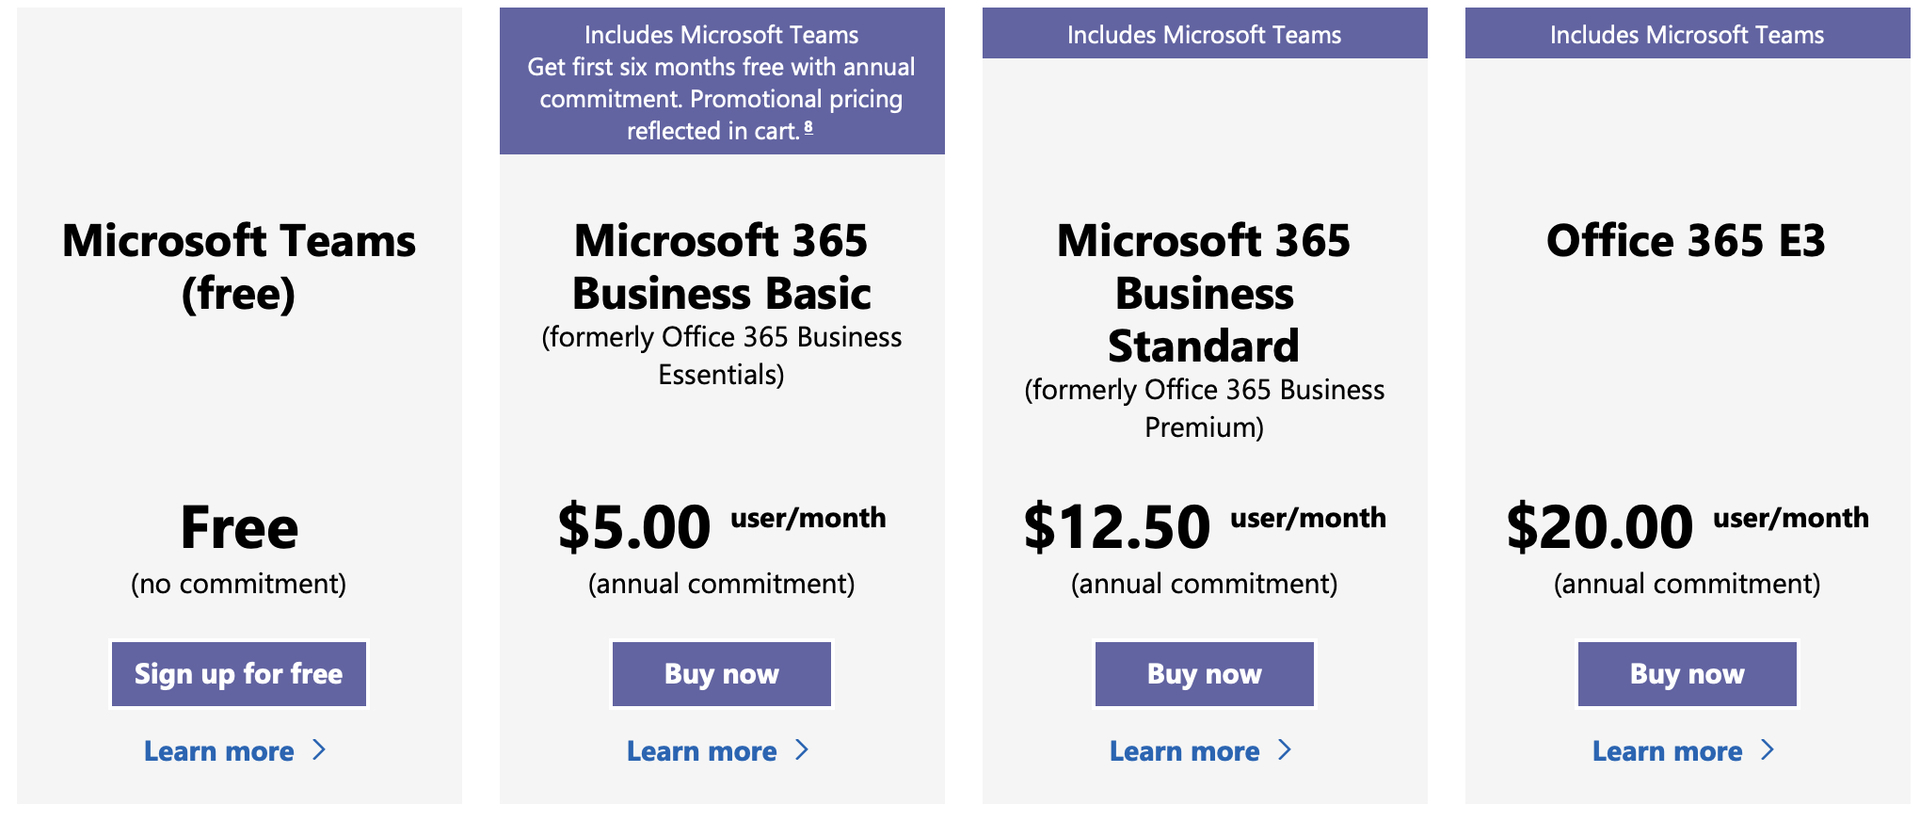 Microsoft Teams prices